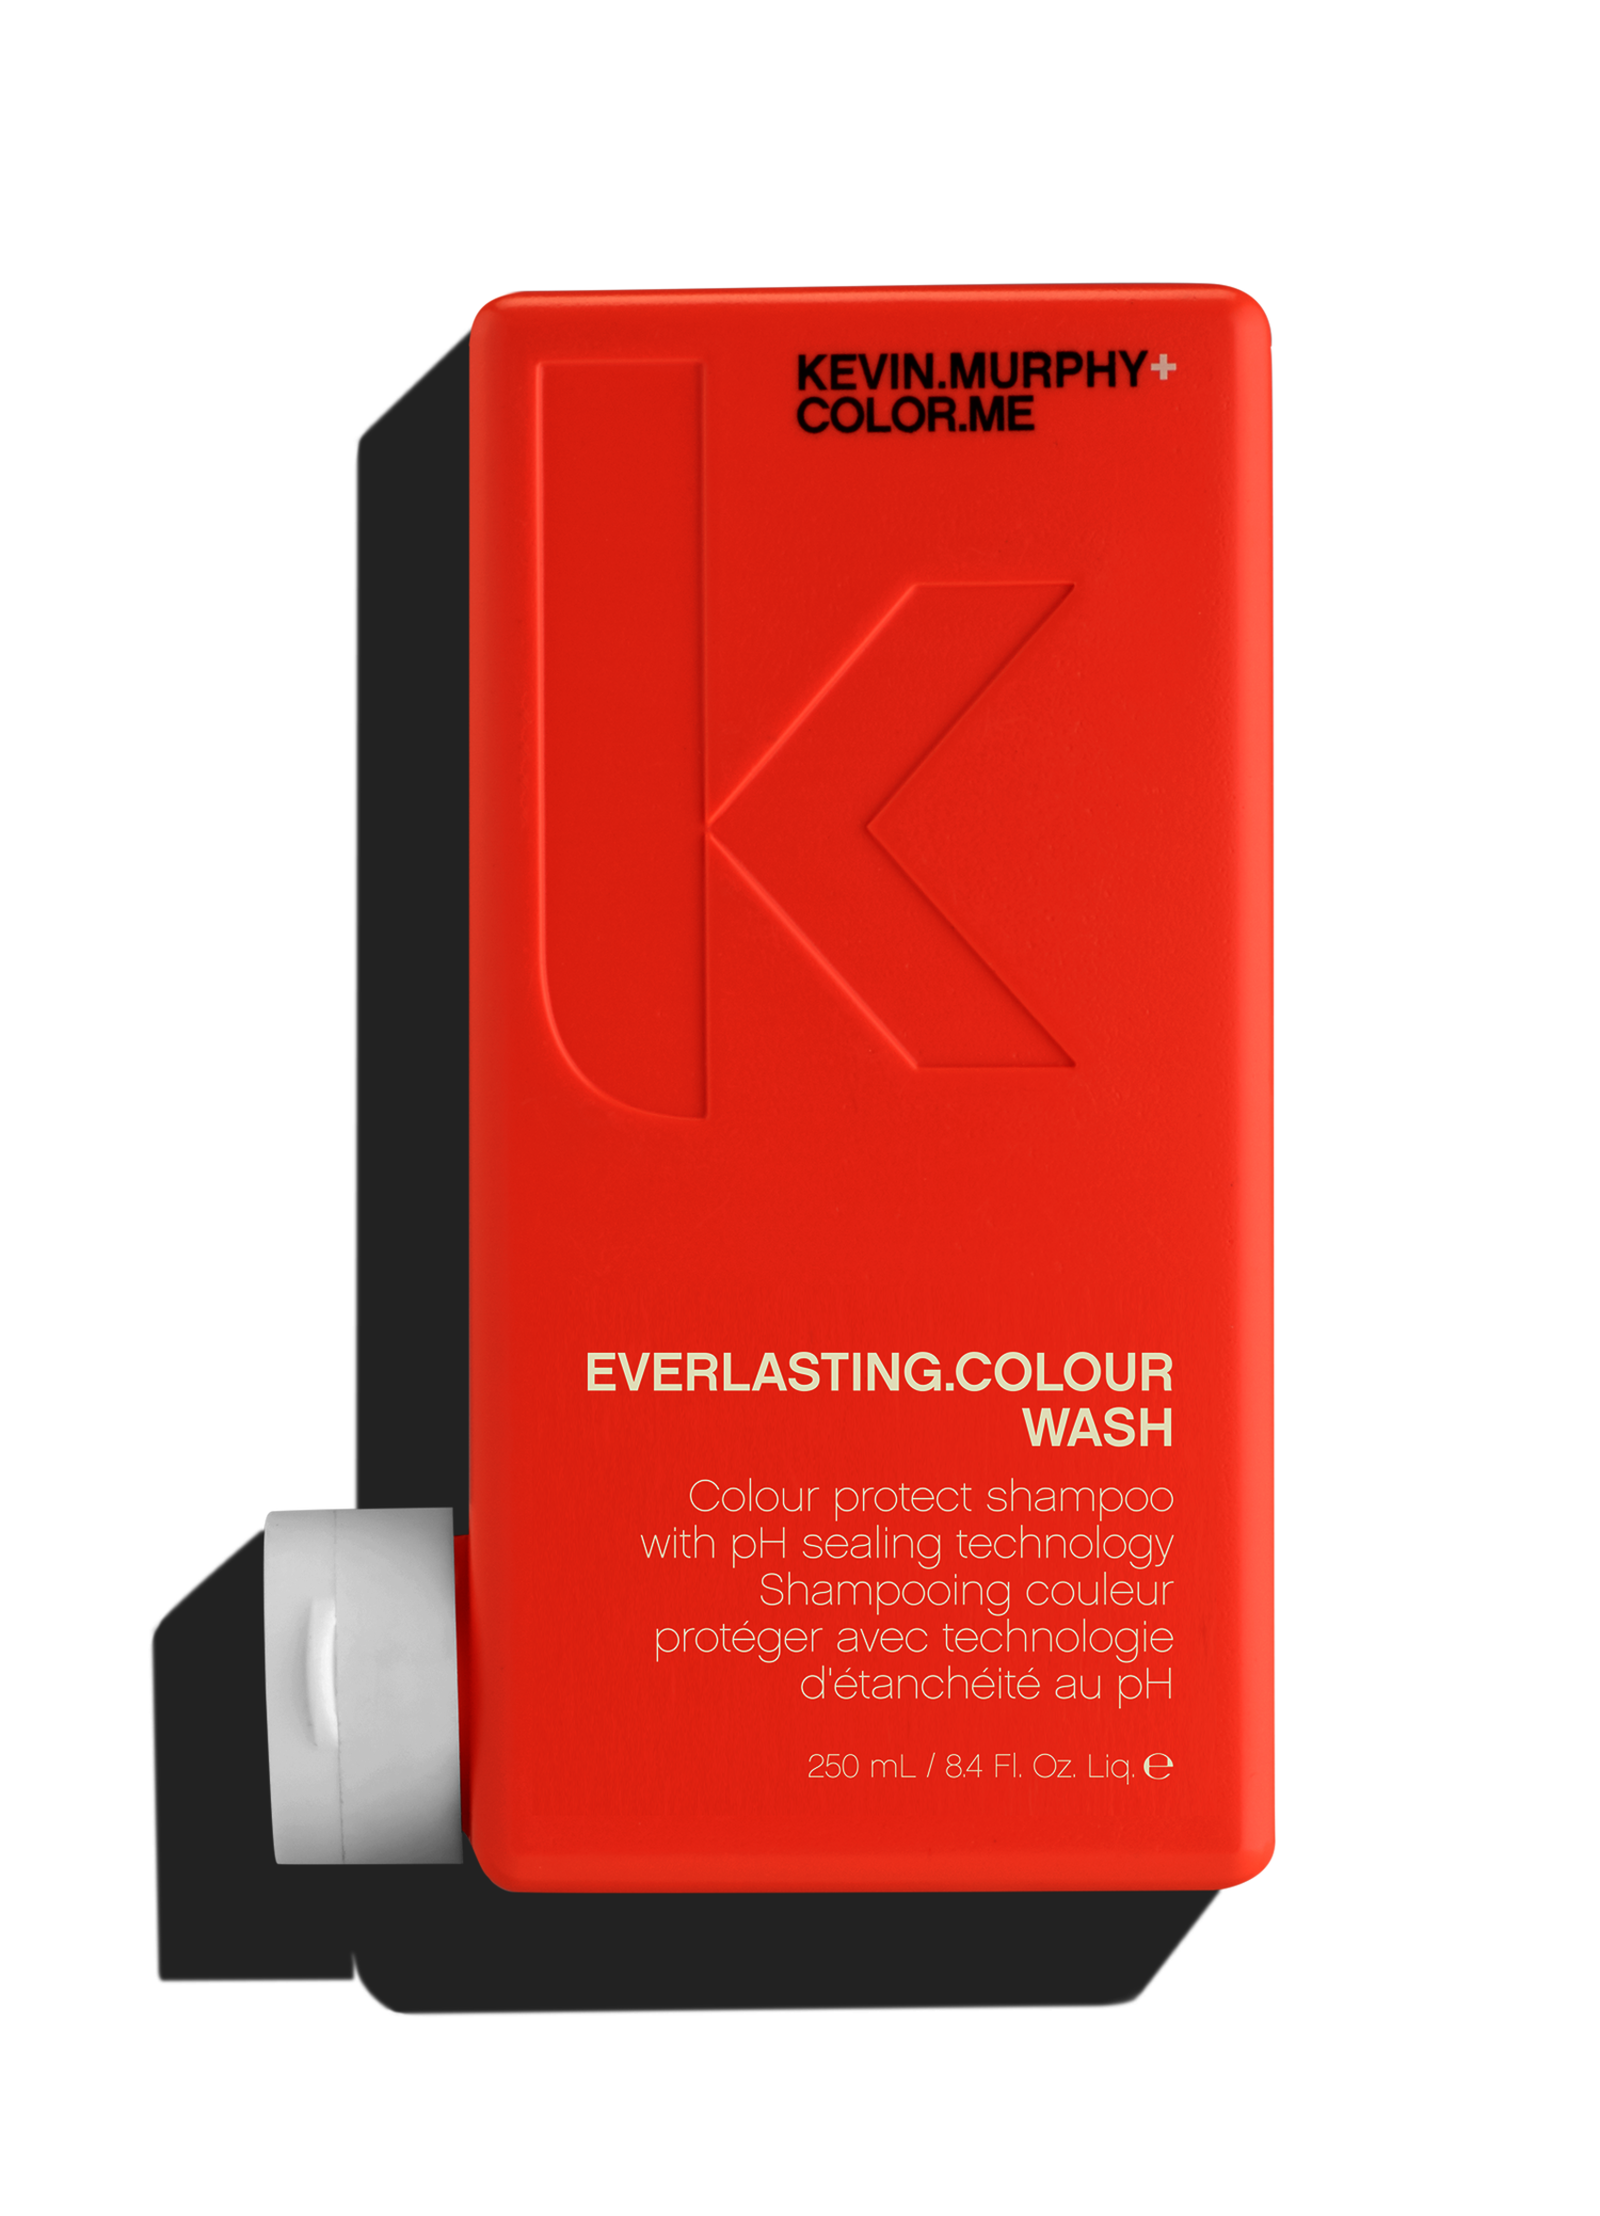 KM Everlasting Colour Wash